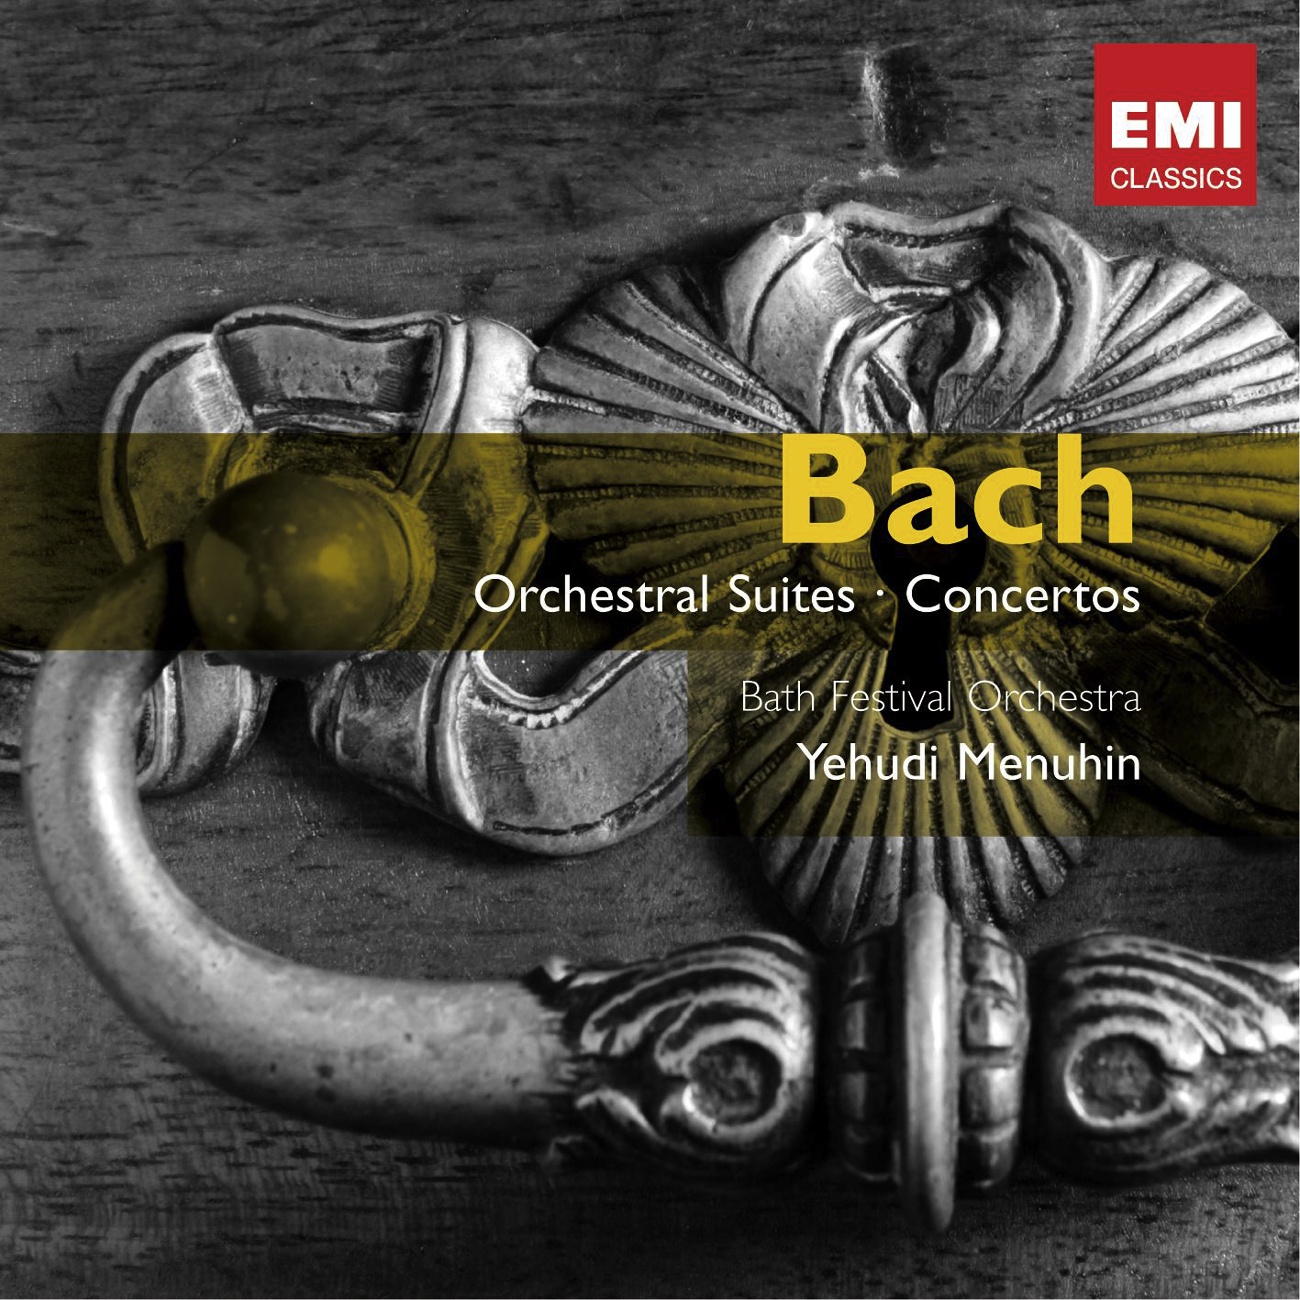 4 Orchestral Suites BWV1066-9 (1991 Digital Remaster), Suite No. 2 in B minor BWV1067: VII.     Badinerie